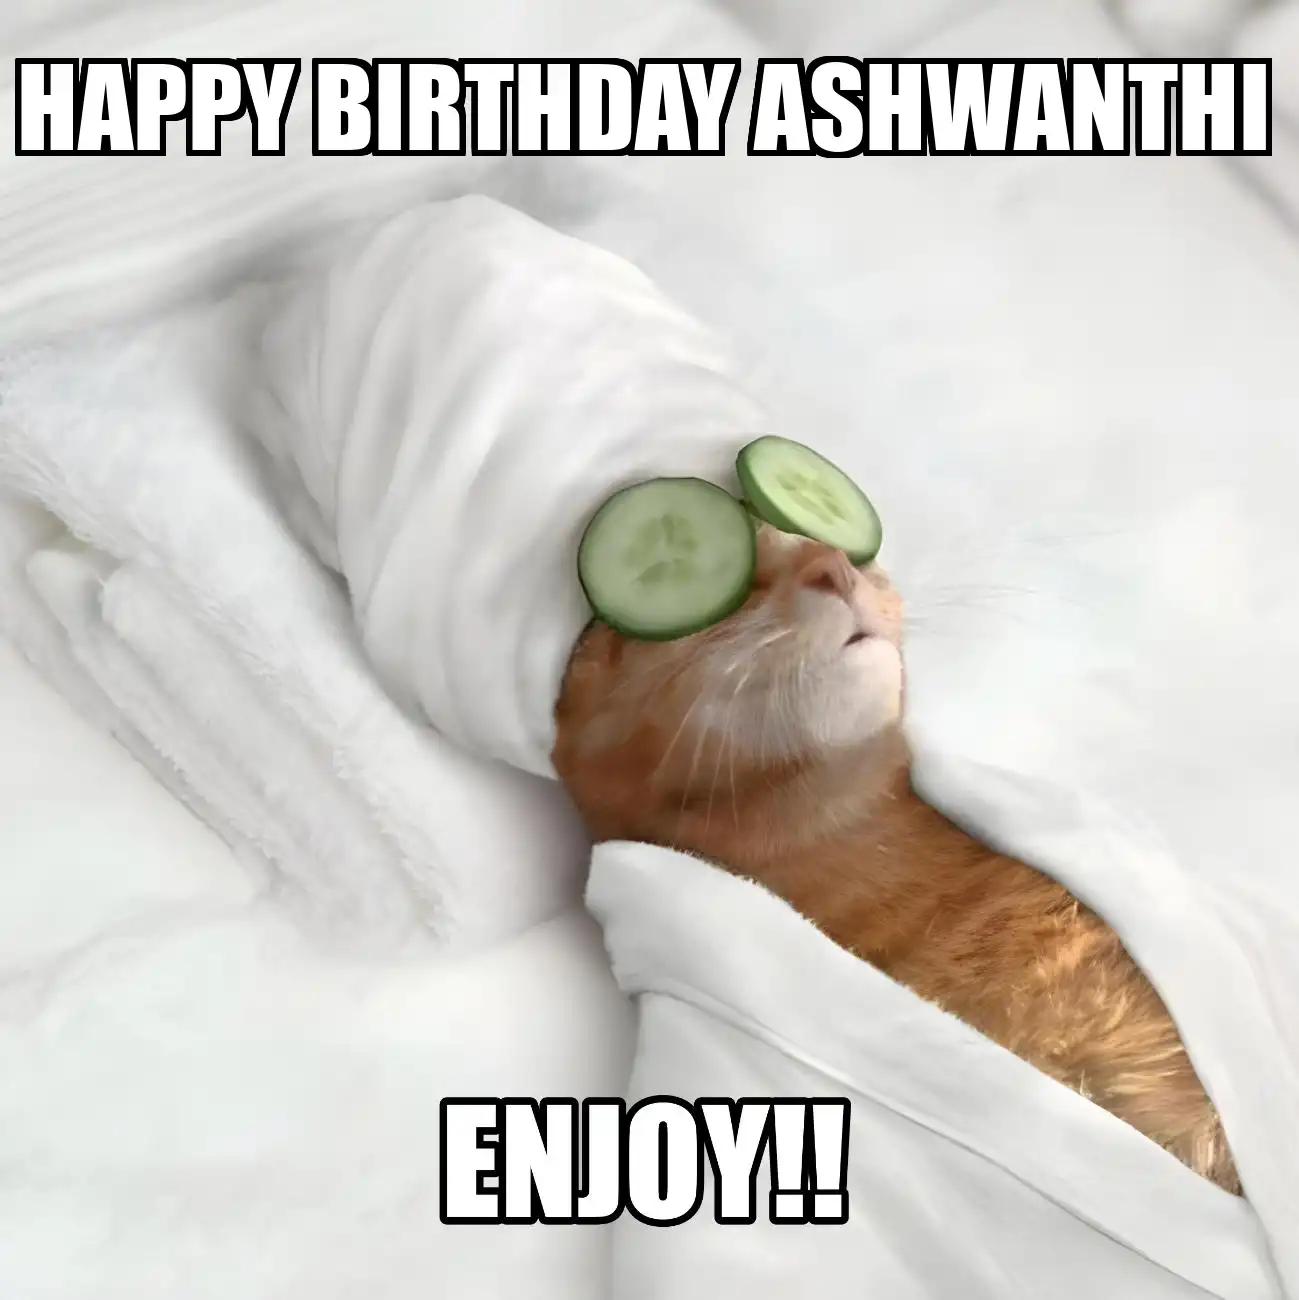 Happy Birthday Ashwanthi Enjoy Cat Meme